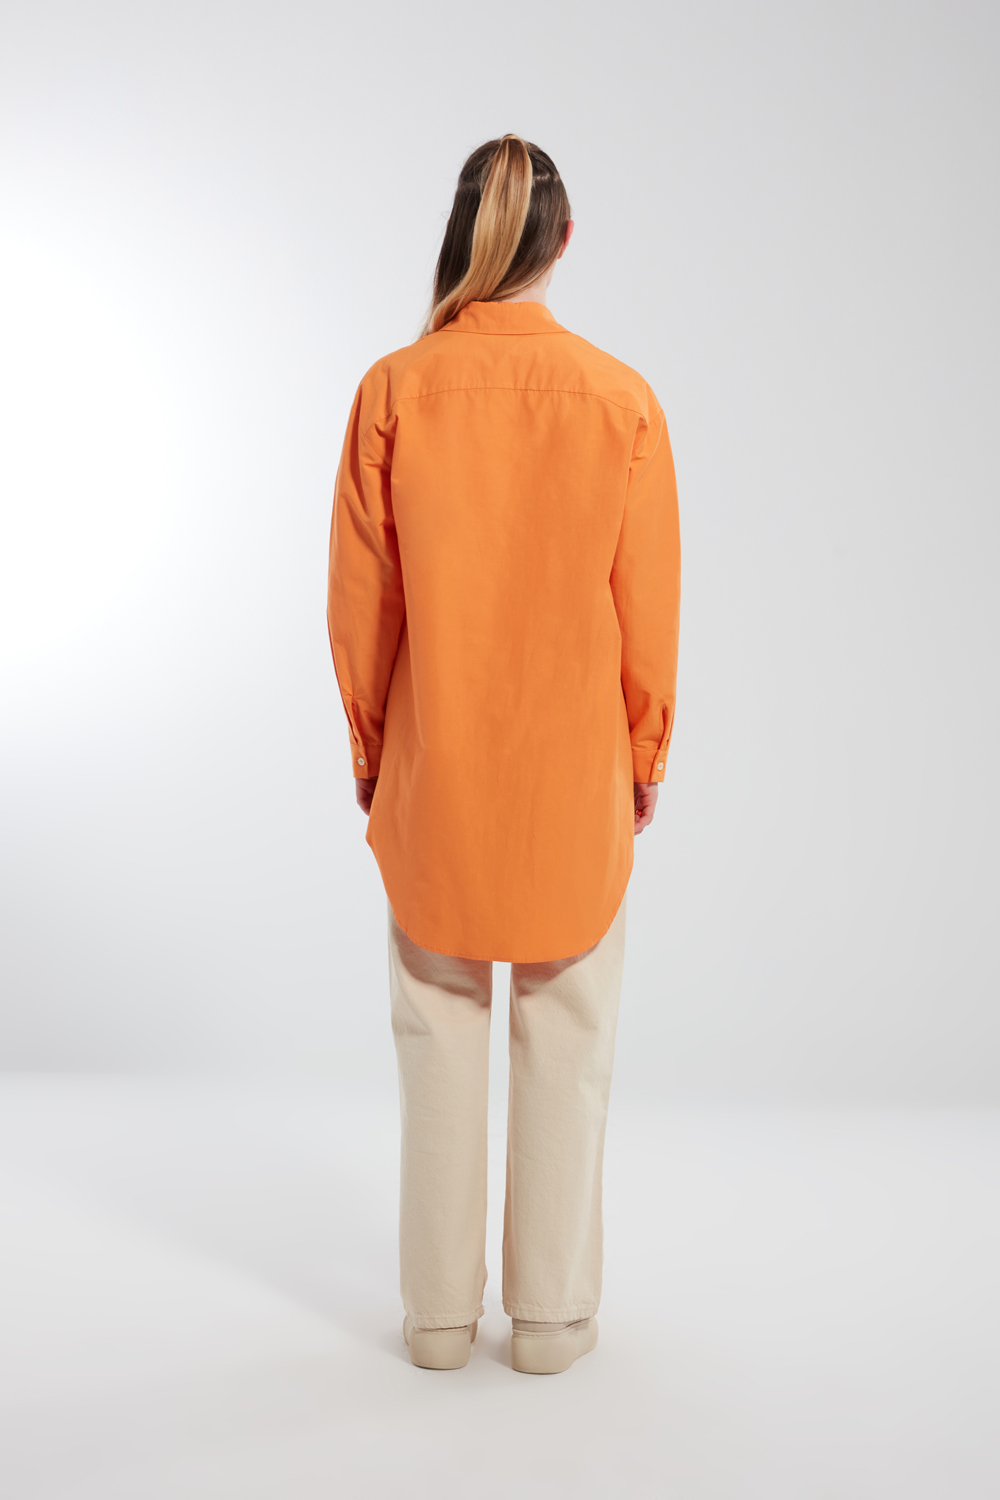 Printed Pocket Detailed Orange Jacket